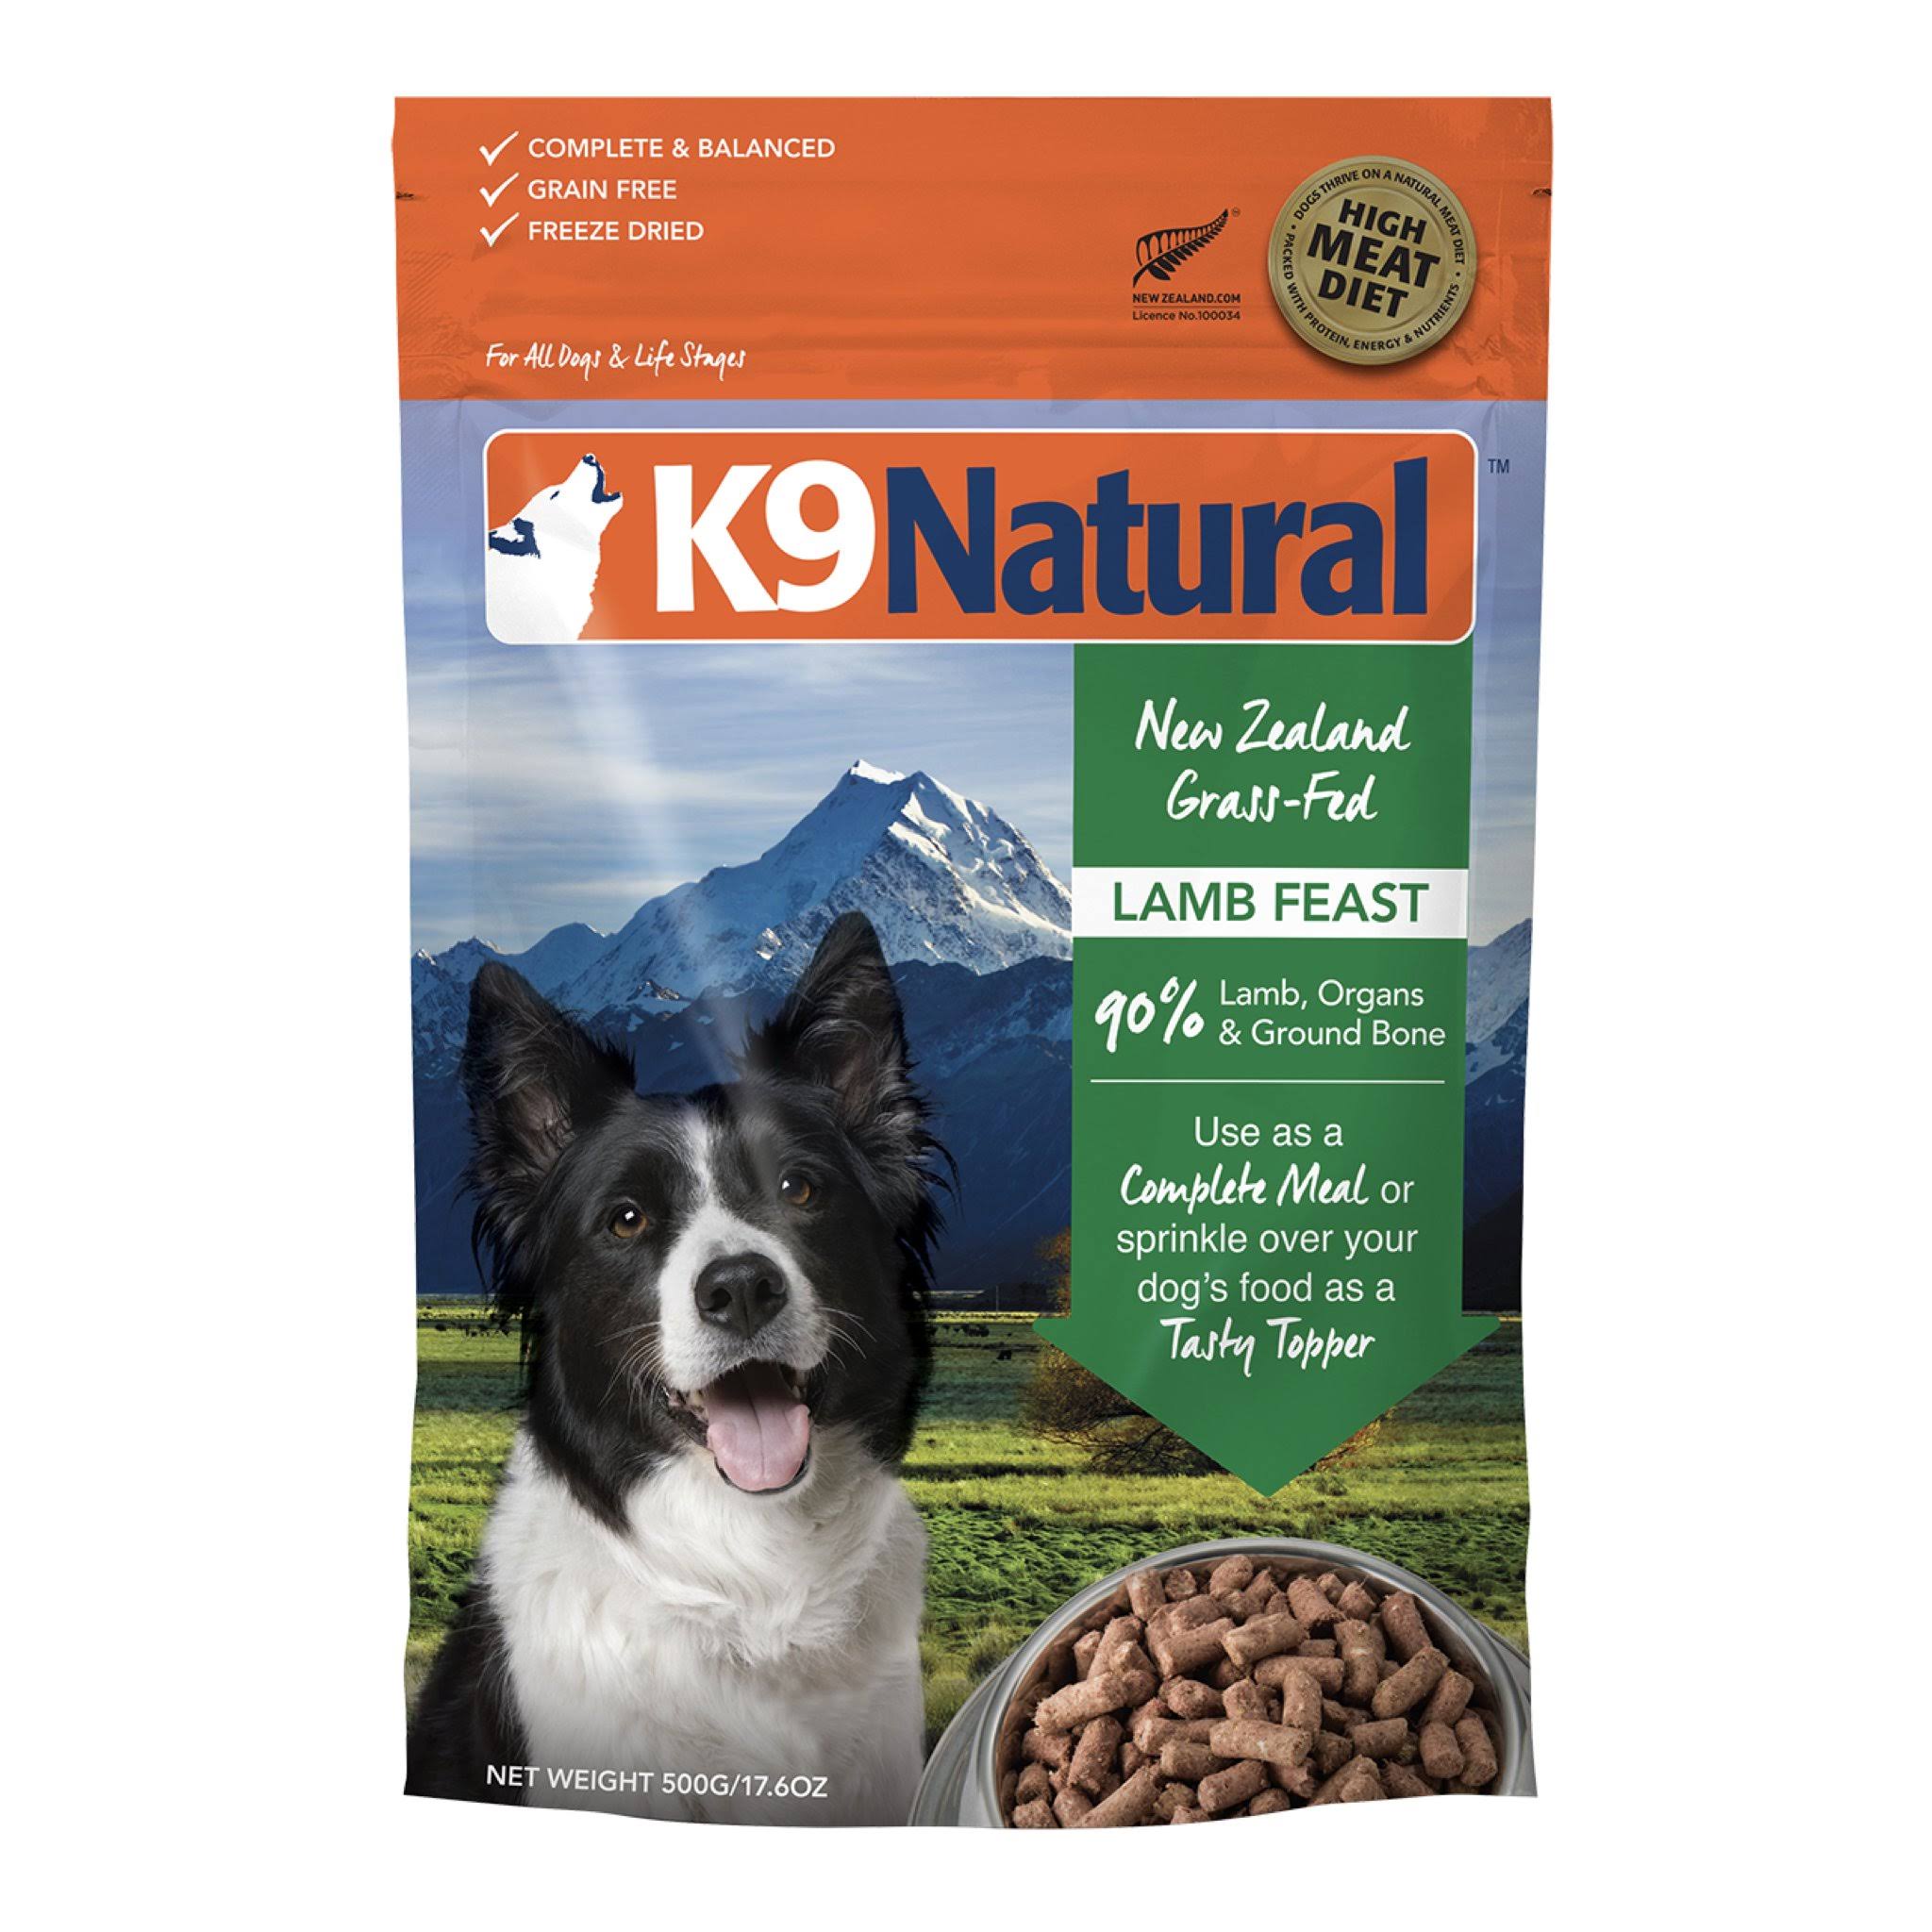 K9 Natural Freeze-Dried Dog Food - Lamb, 1.1lbs